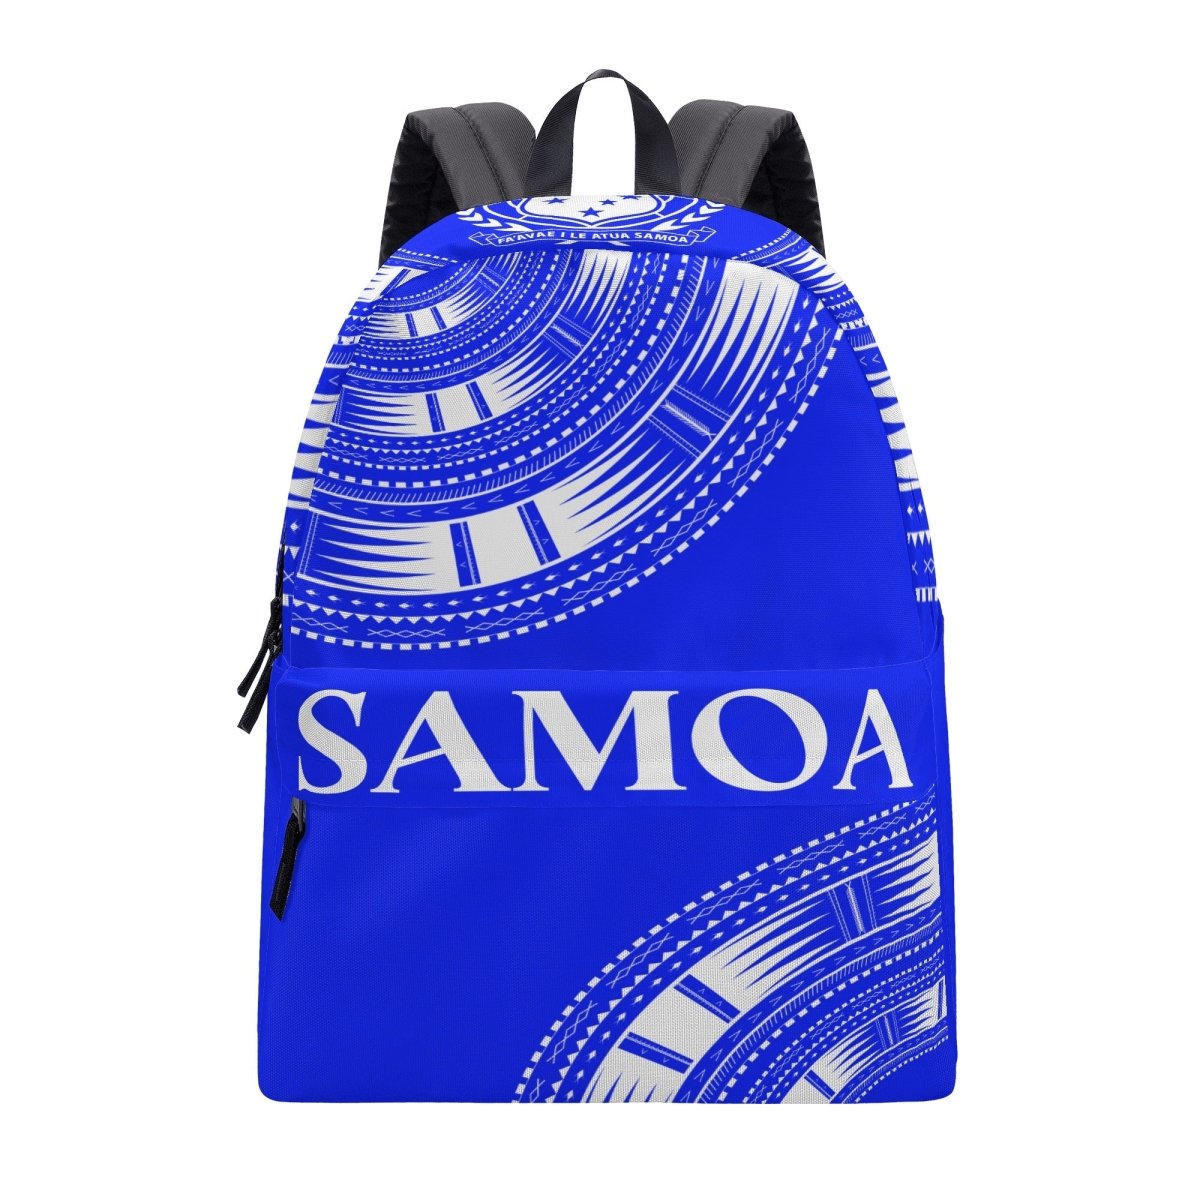 Samoa Backpack - Blue - Nesian Kulture